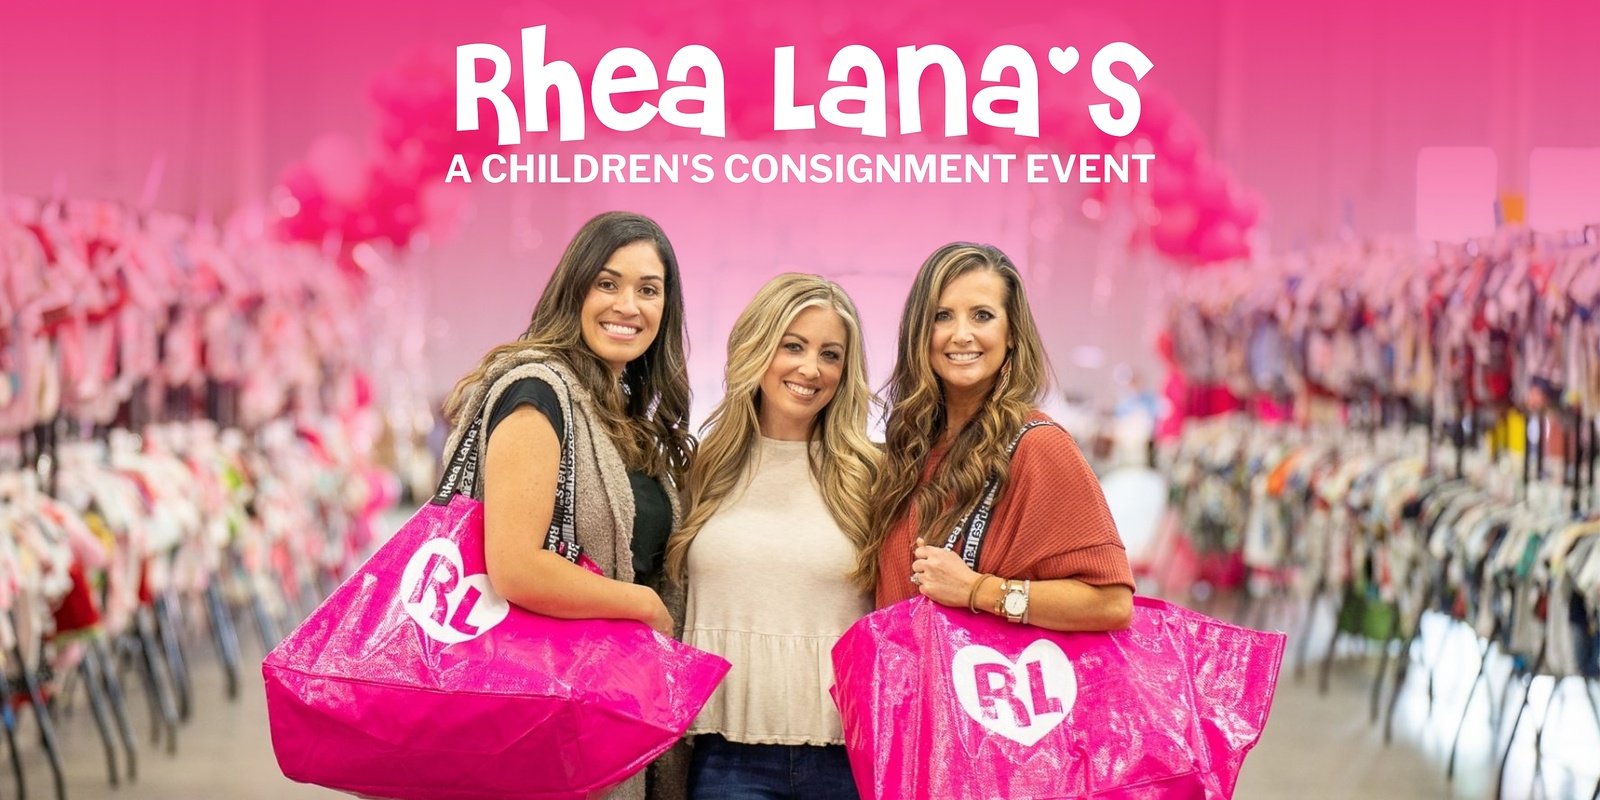 Banner image for Rhea Lana's of El Dorado HUGE Fall/Winter Family Shopping Event!